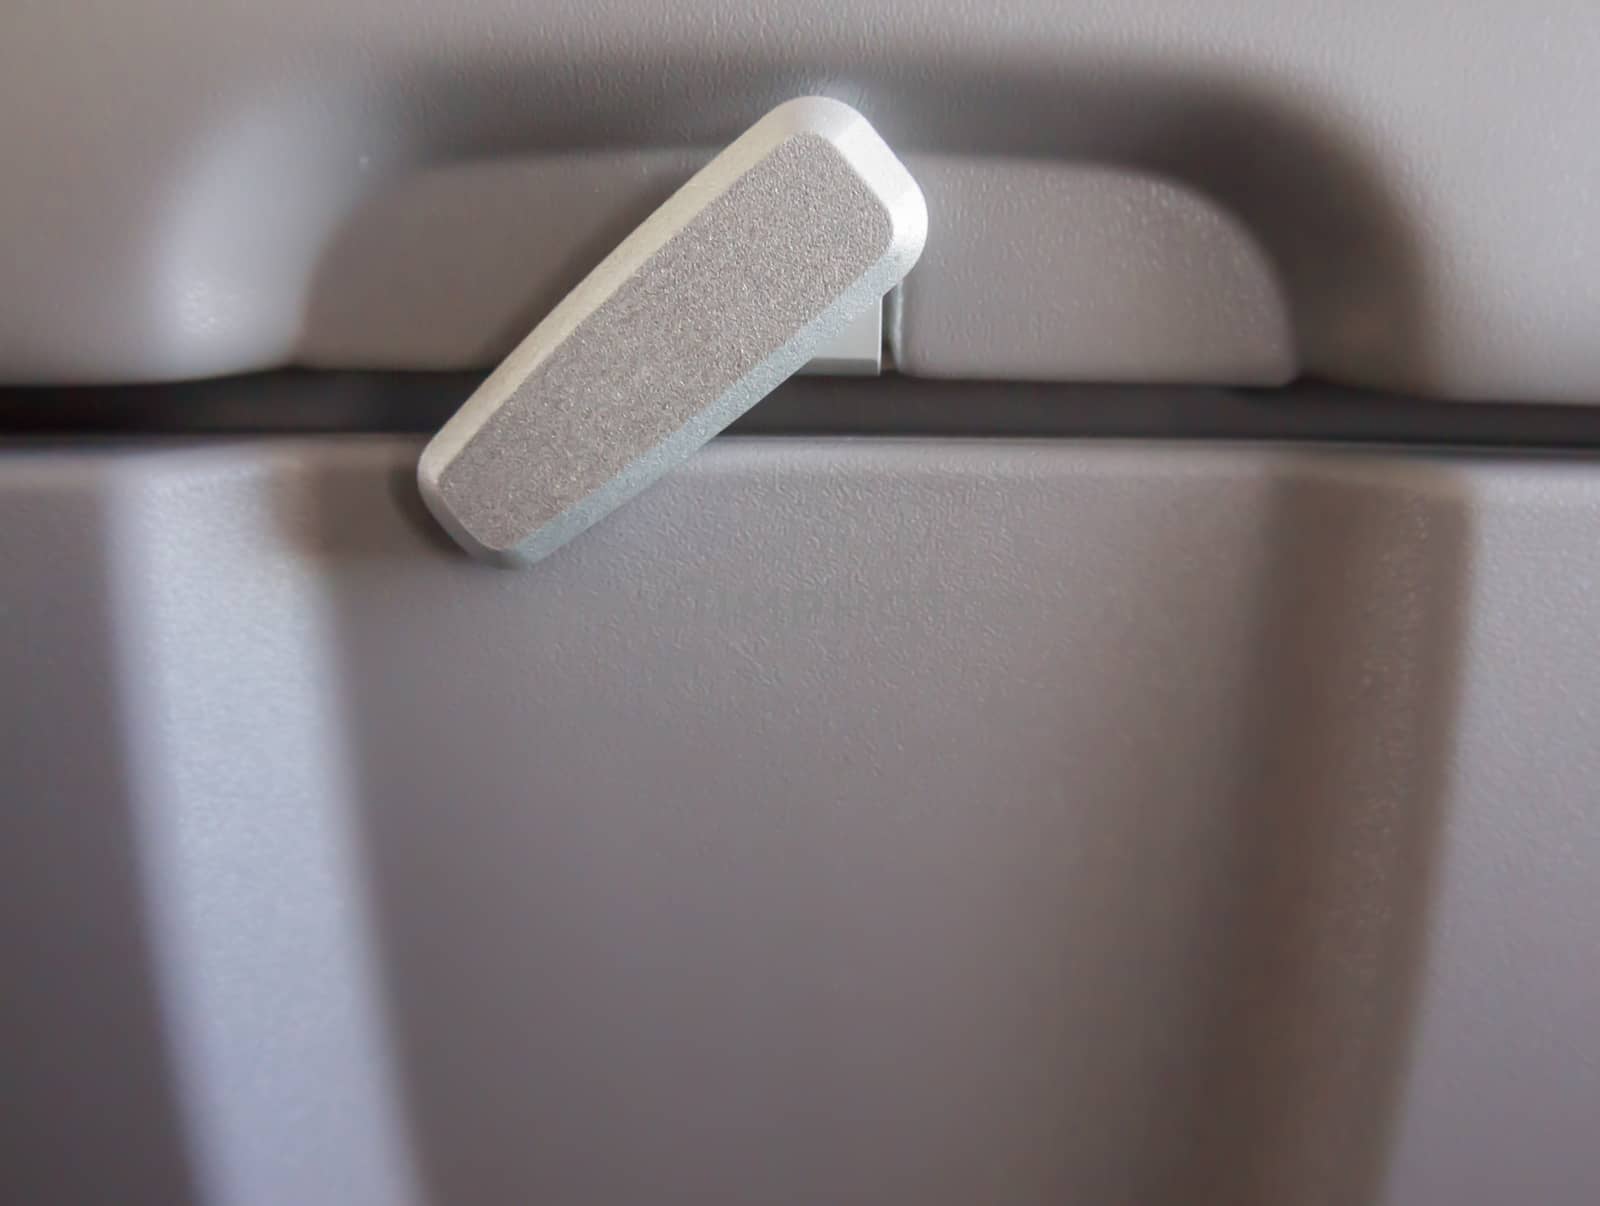 Locker of storage behind the passenger seat in the plane